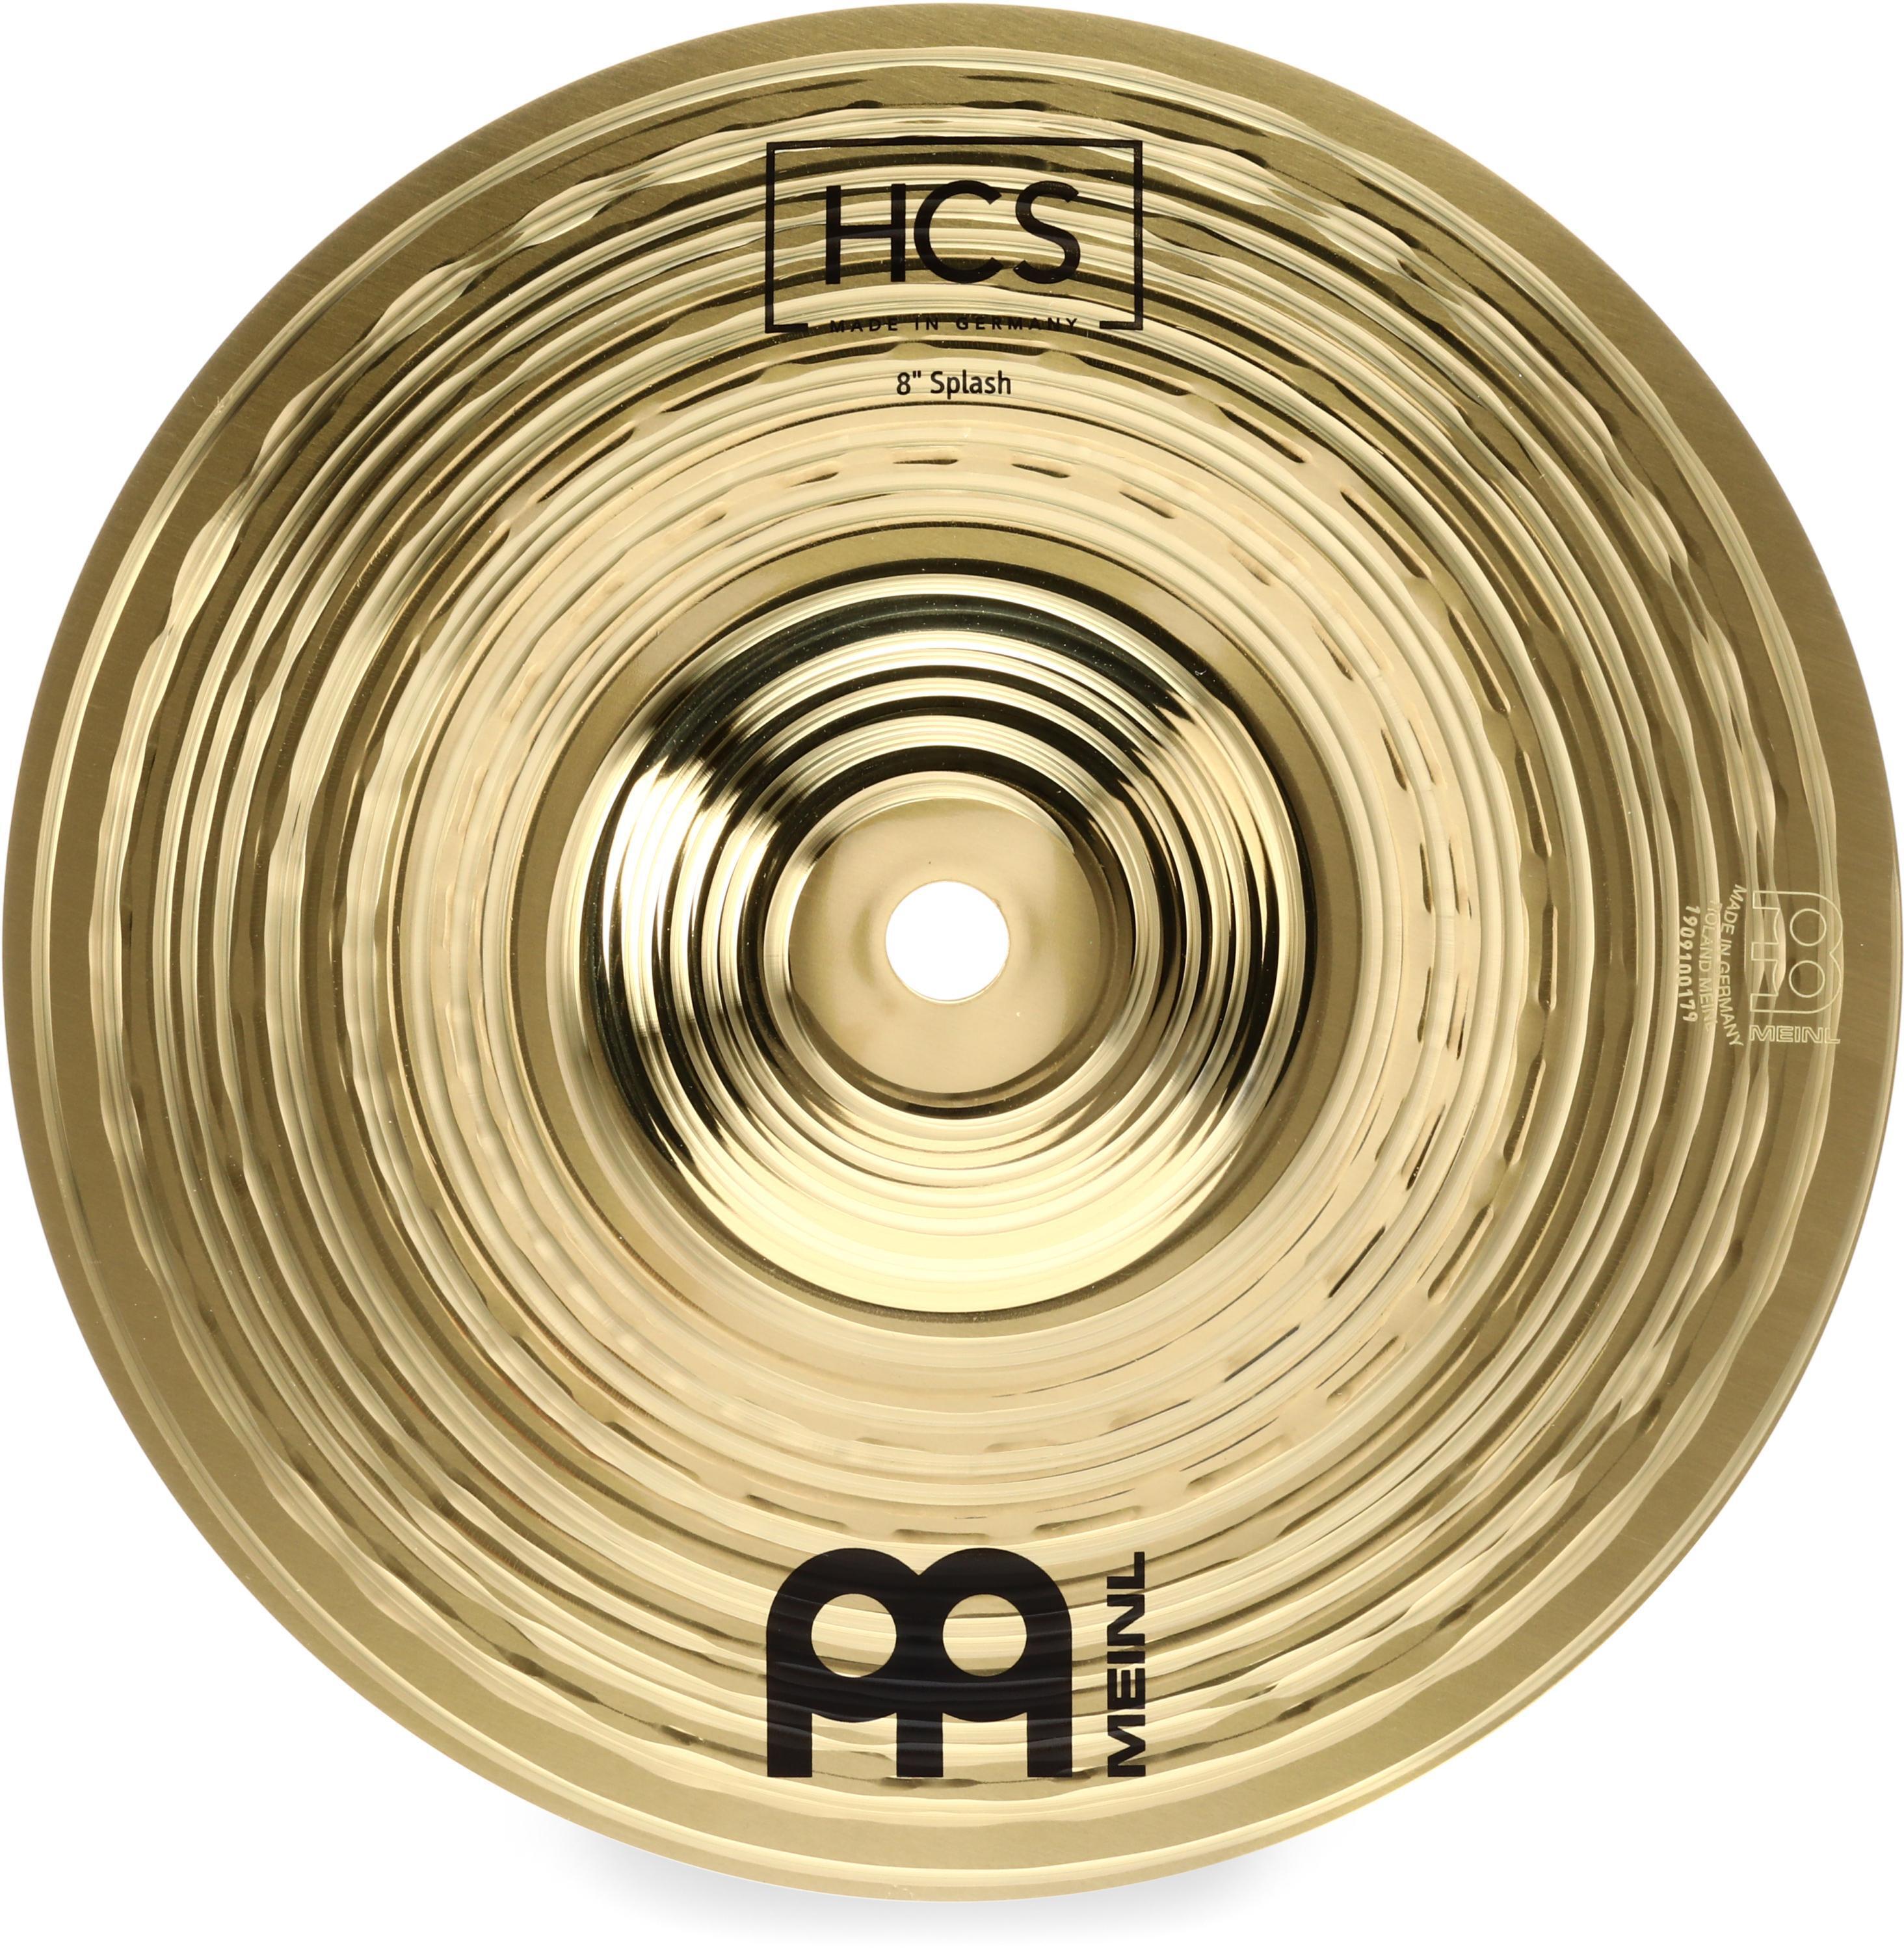 Bundled Item: Meinl Cymbals 8-inch HCS Splash Cymbal